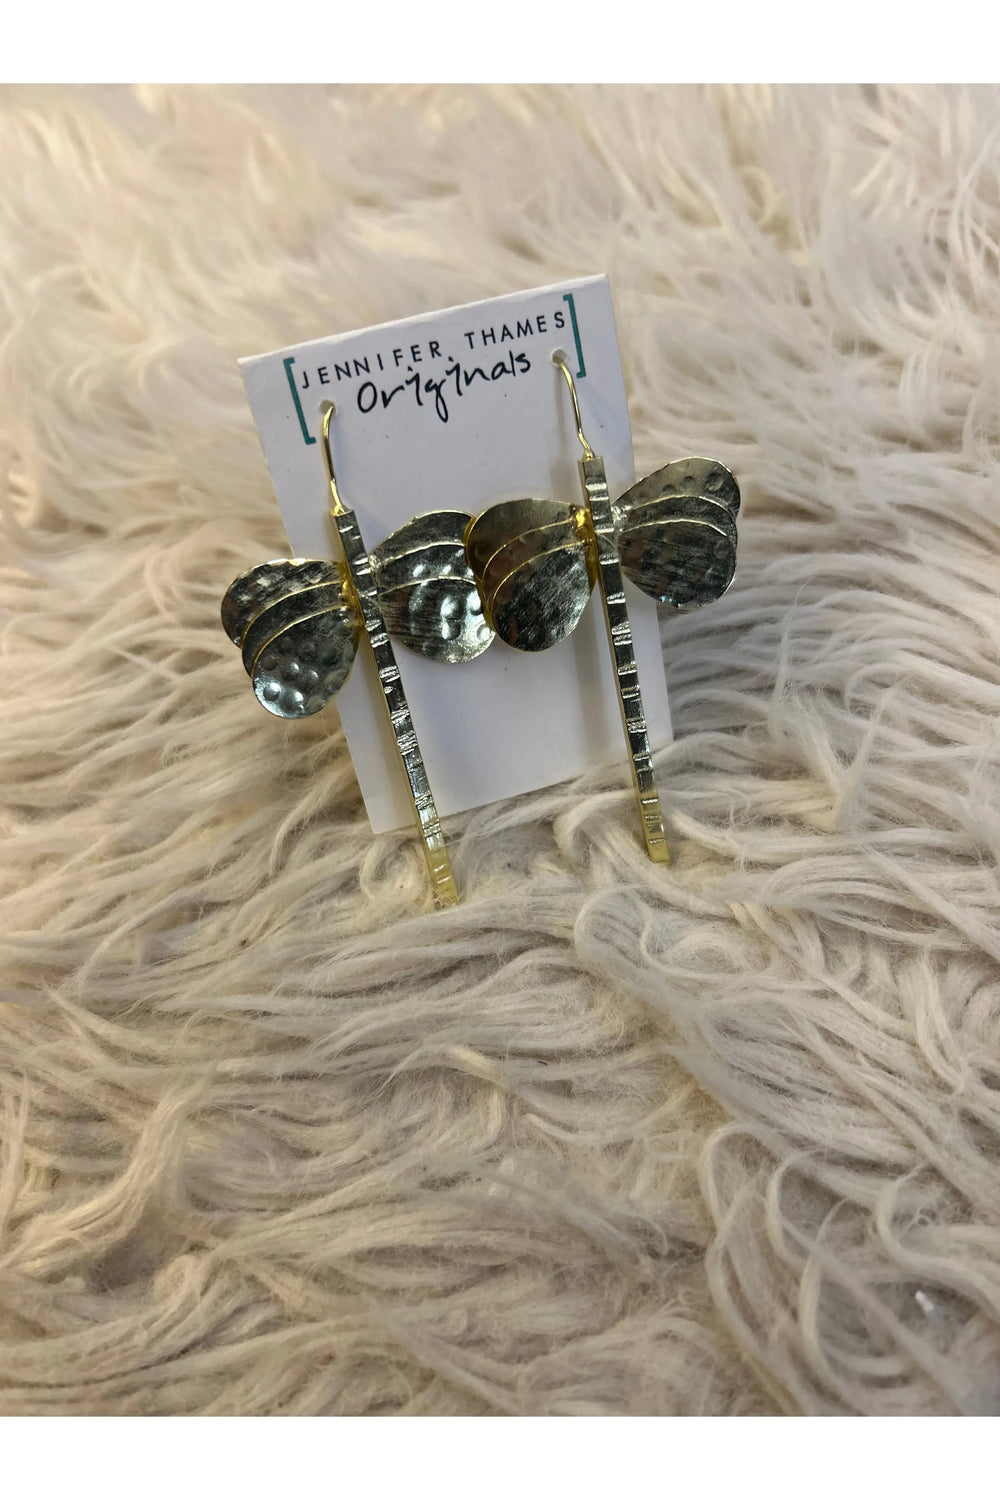 Jennifer Thames Jewelry - Vintage Dragonfly Boutique